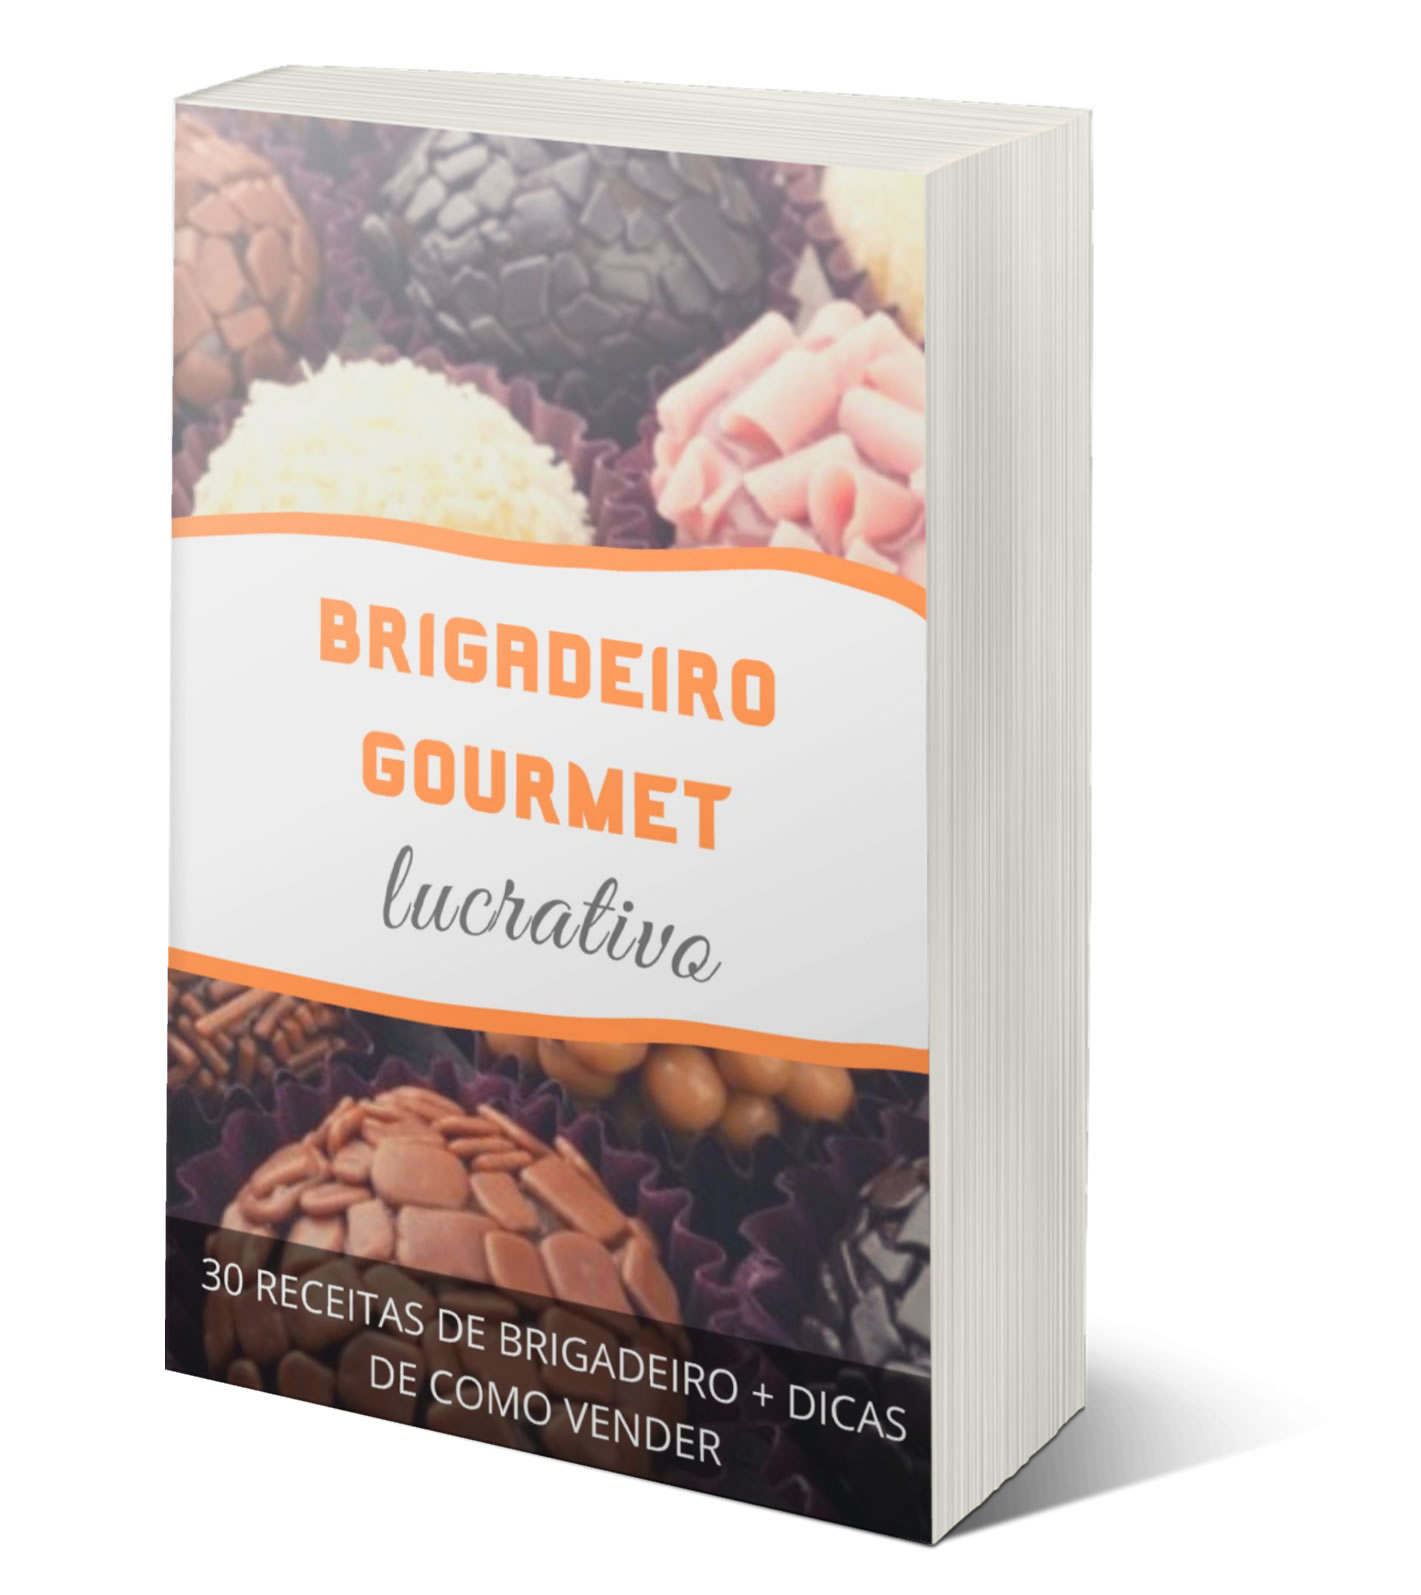 ebook plr brigadeiro gourmet